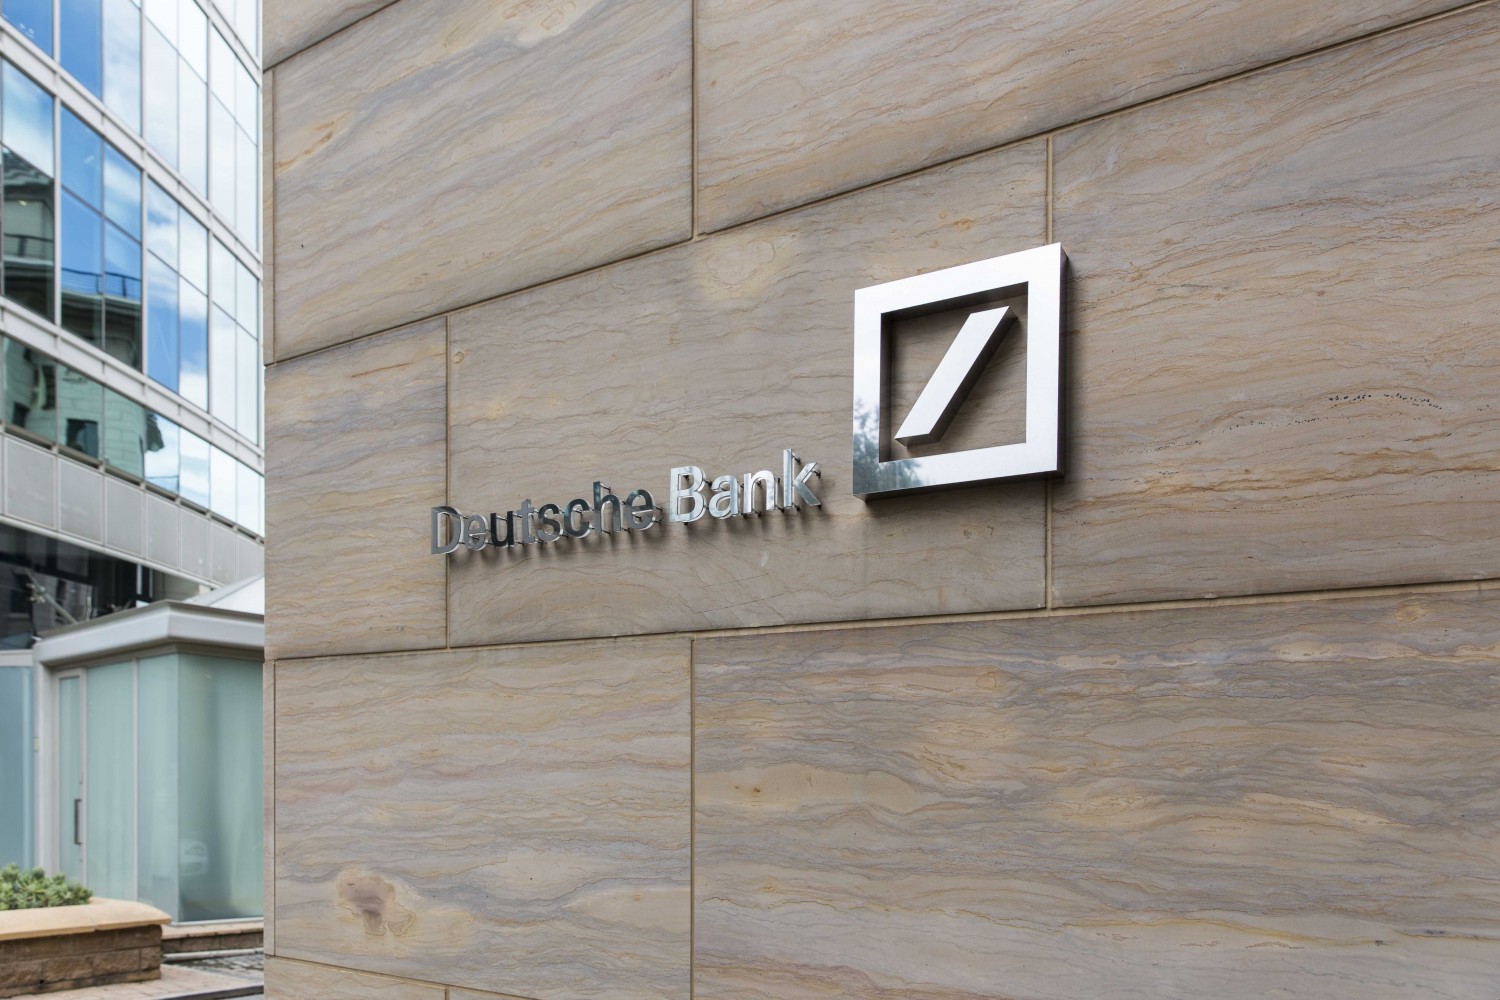 Deutsche Bank goes live with Swift gpi